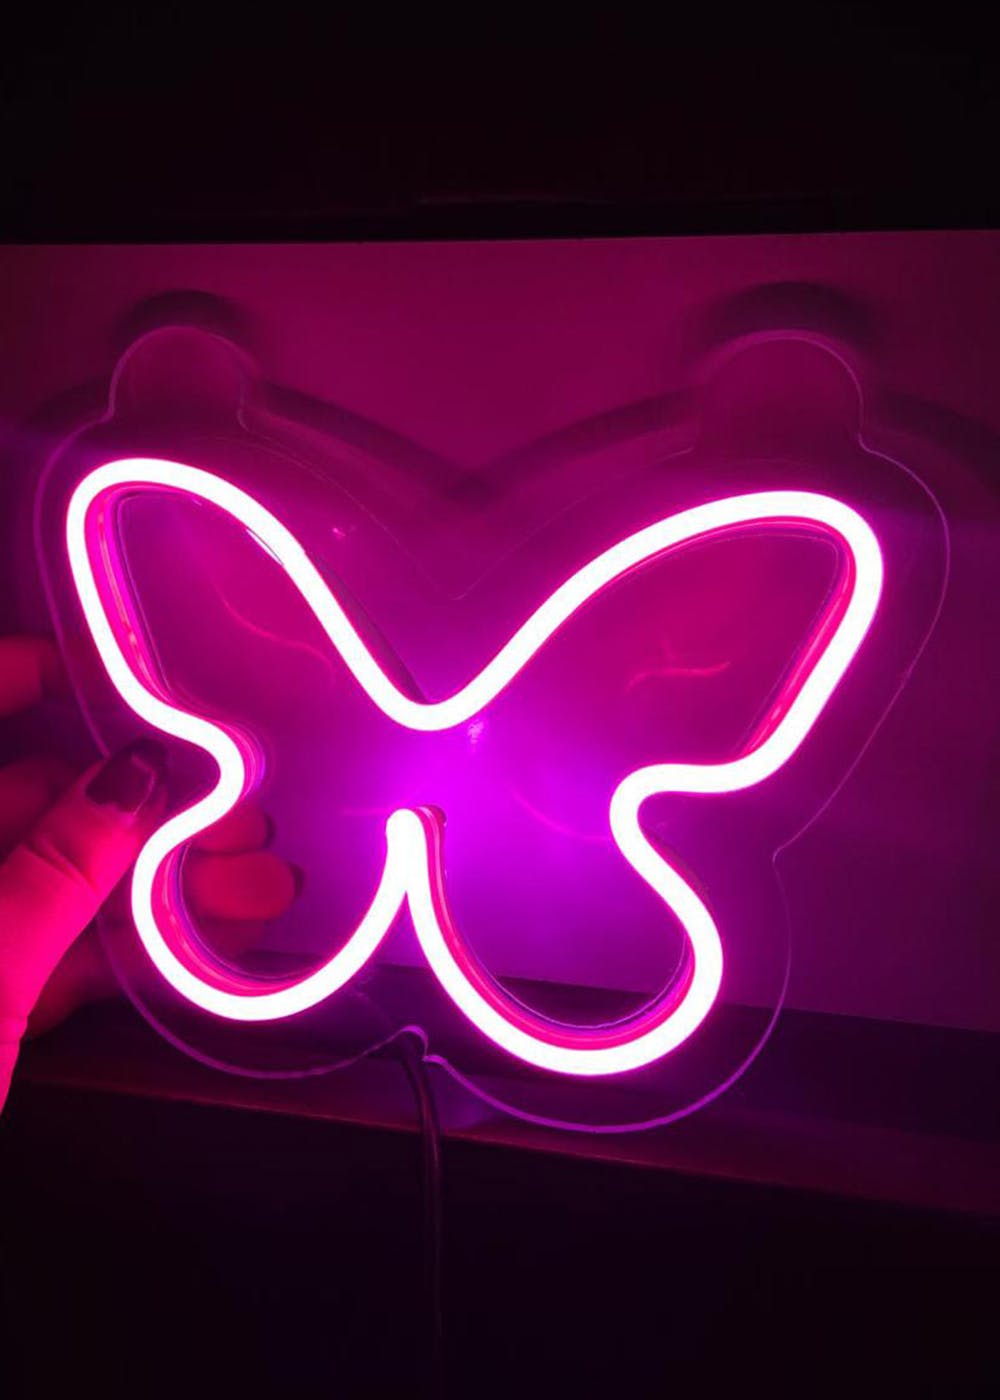 Get Neon Light- Butterfly at ₹ 1050 | LBB Shop